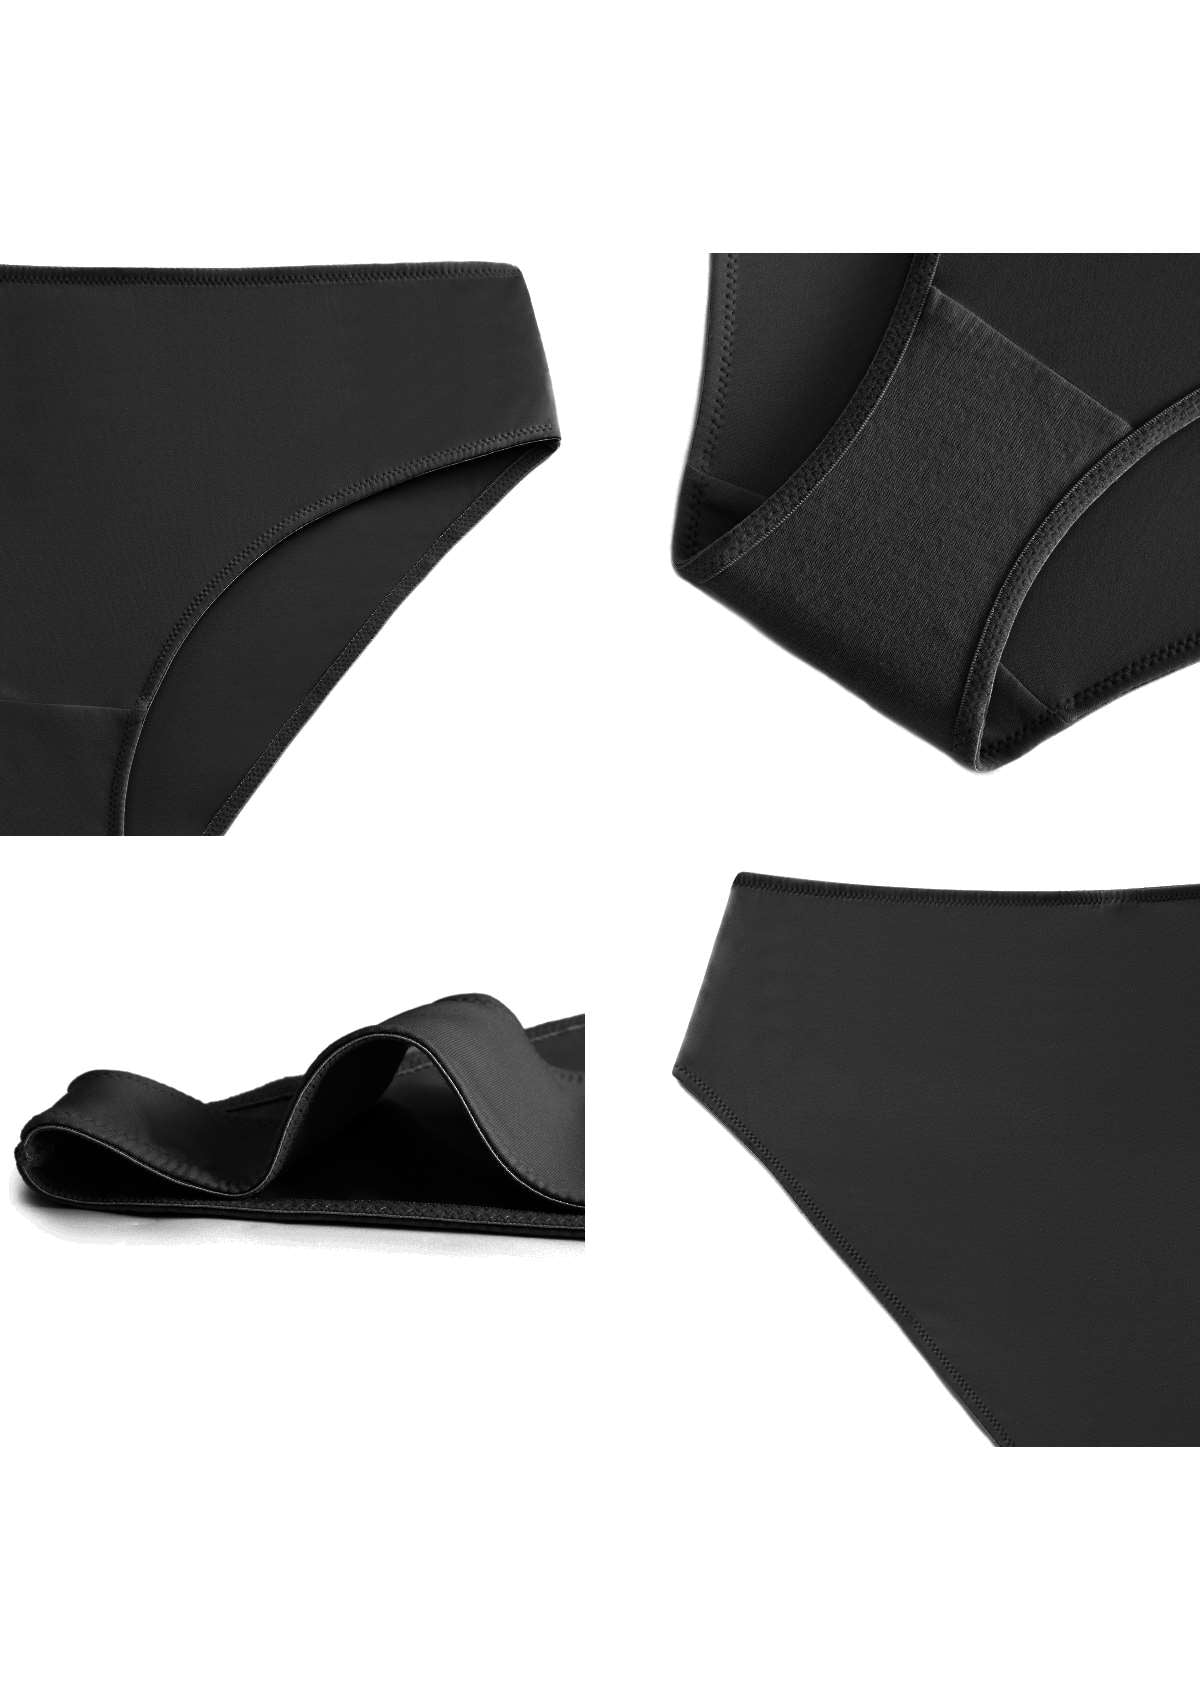 HSIA Patricia Smooth Soft Stretch Comfort High-Rise Brief Underwear - L / Beige